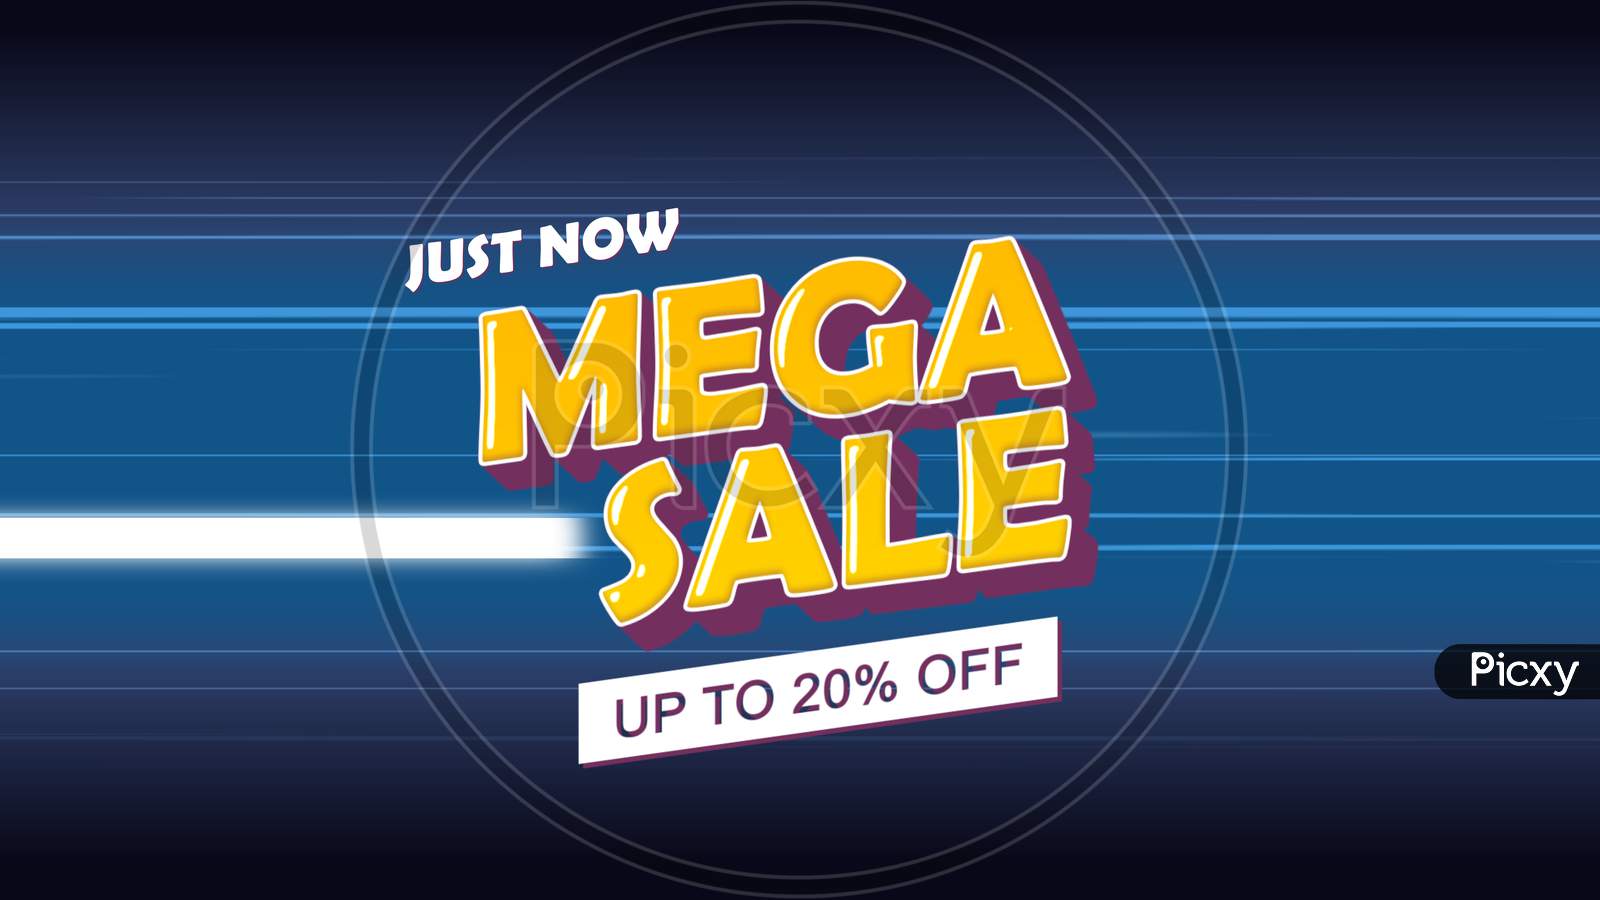 Just Now Mega Sale Up To 20% Off Word Illustration Use For Landing Page,Website, Poster, Banner, Flyer,Sale Promotion,Advertising, Marketing